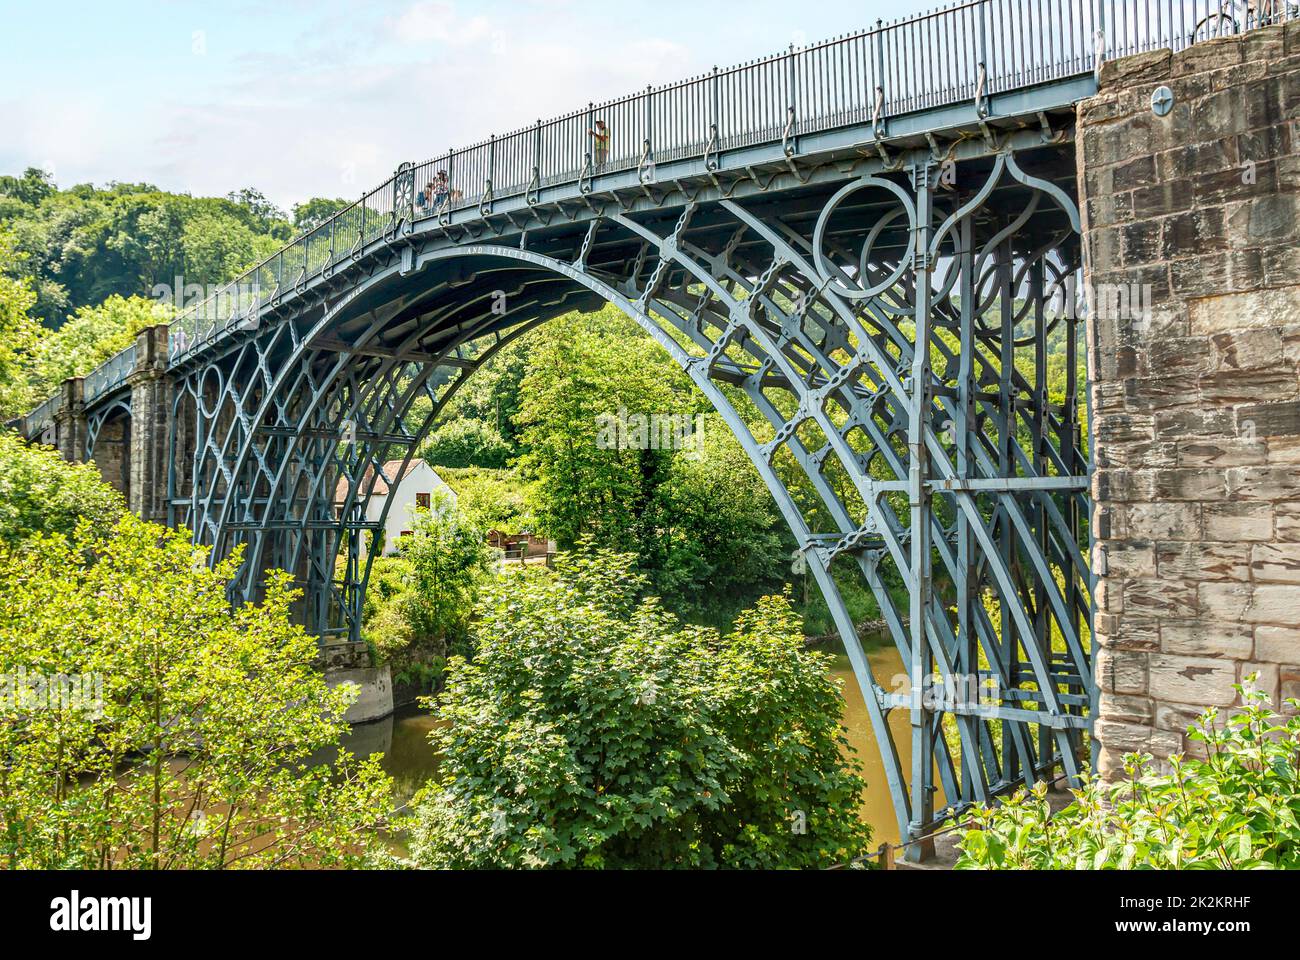 The Iron Bridge crosses the River Severn at the Ironbridge Gorge in Shropshire, England Stock Photo